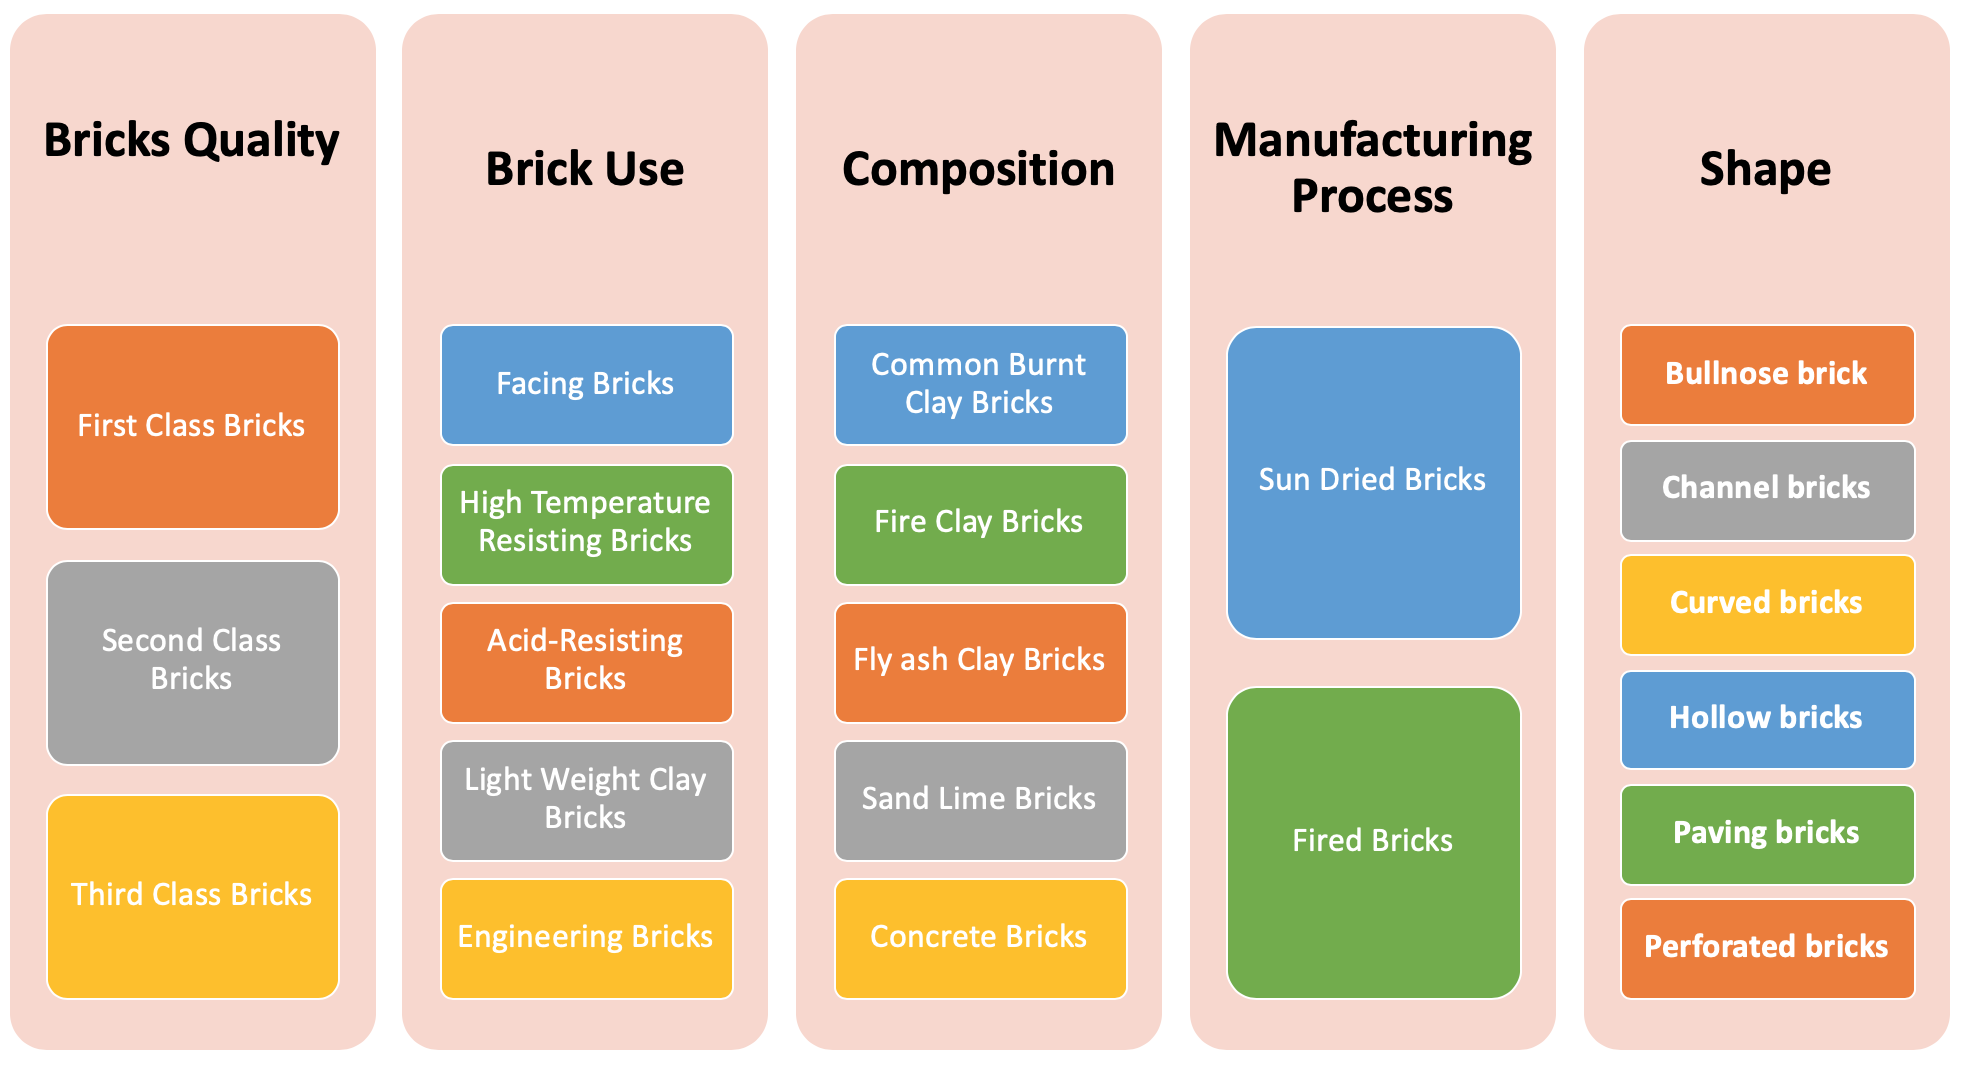 Types of Bricks